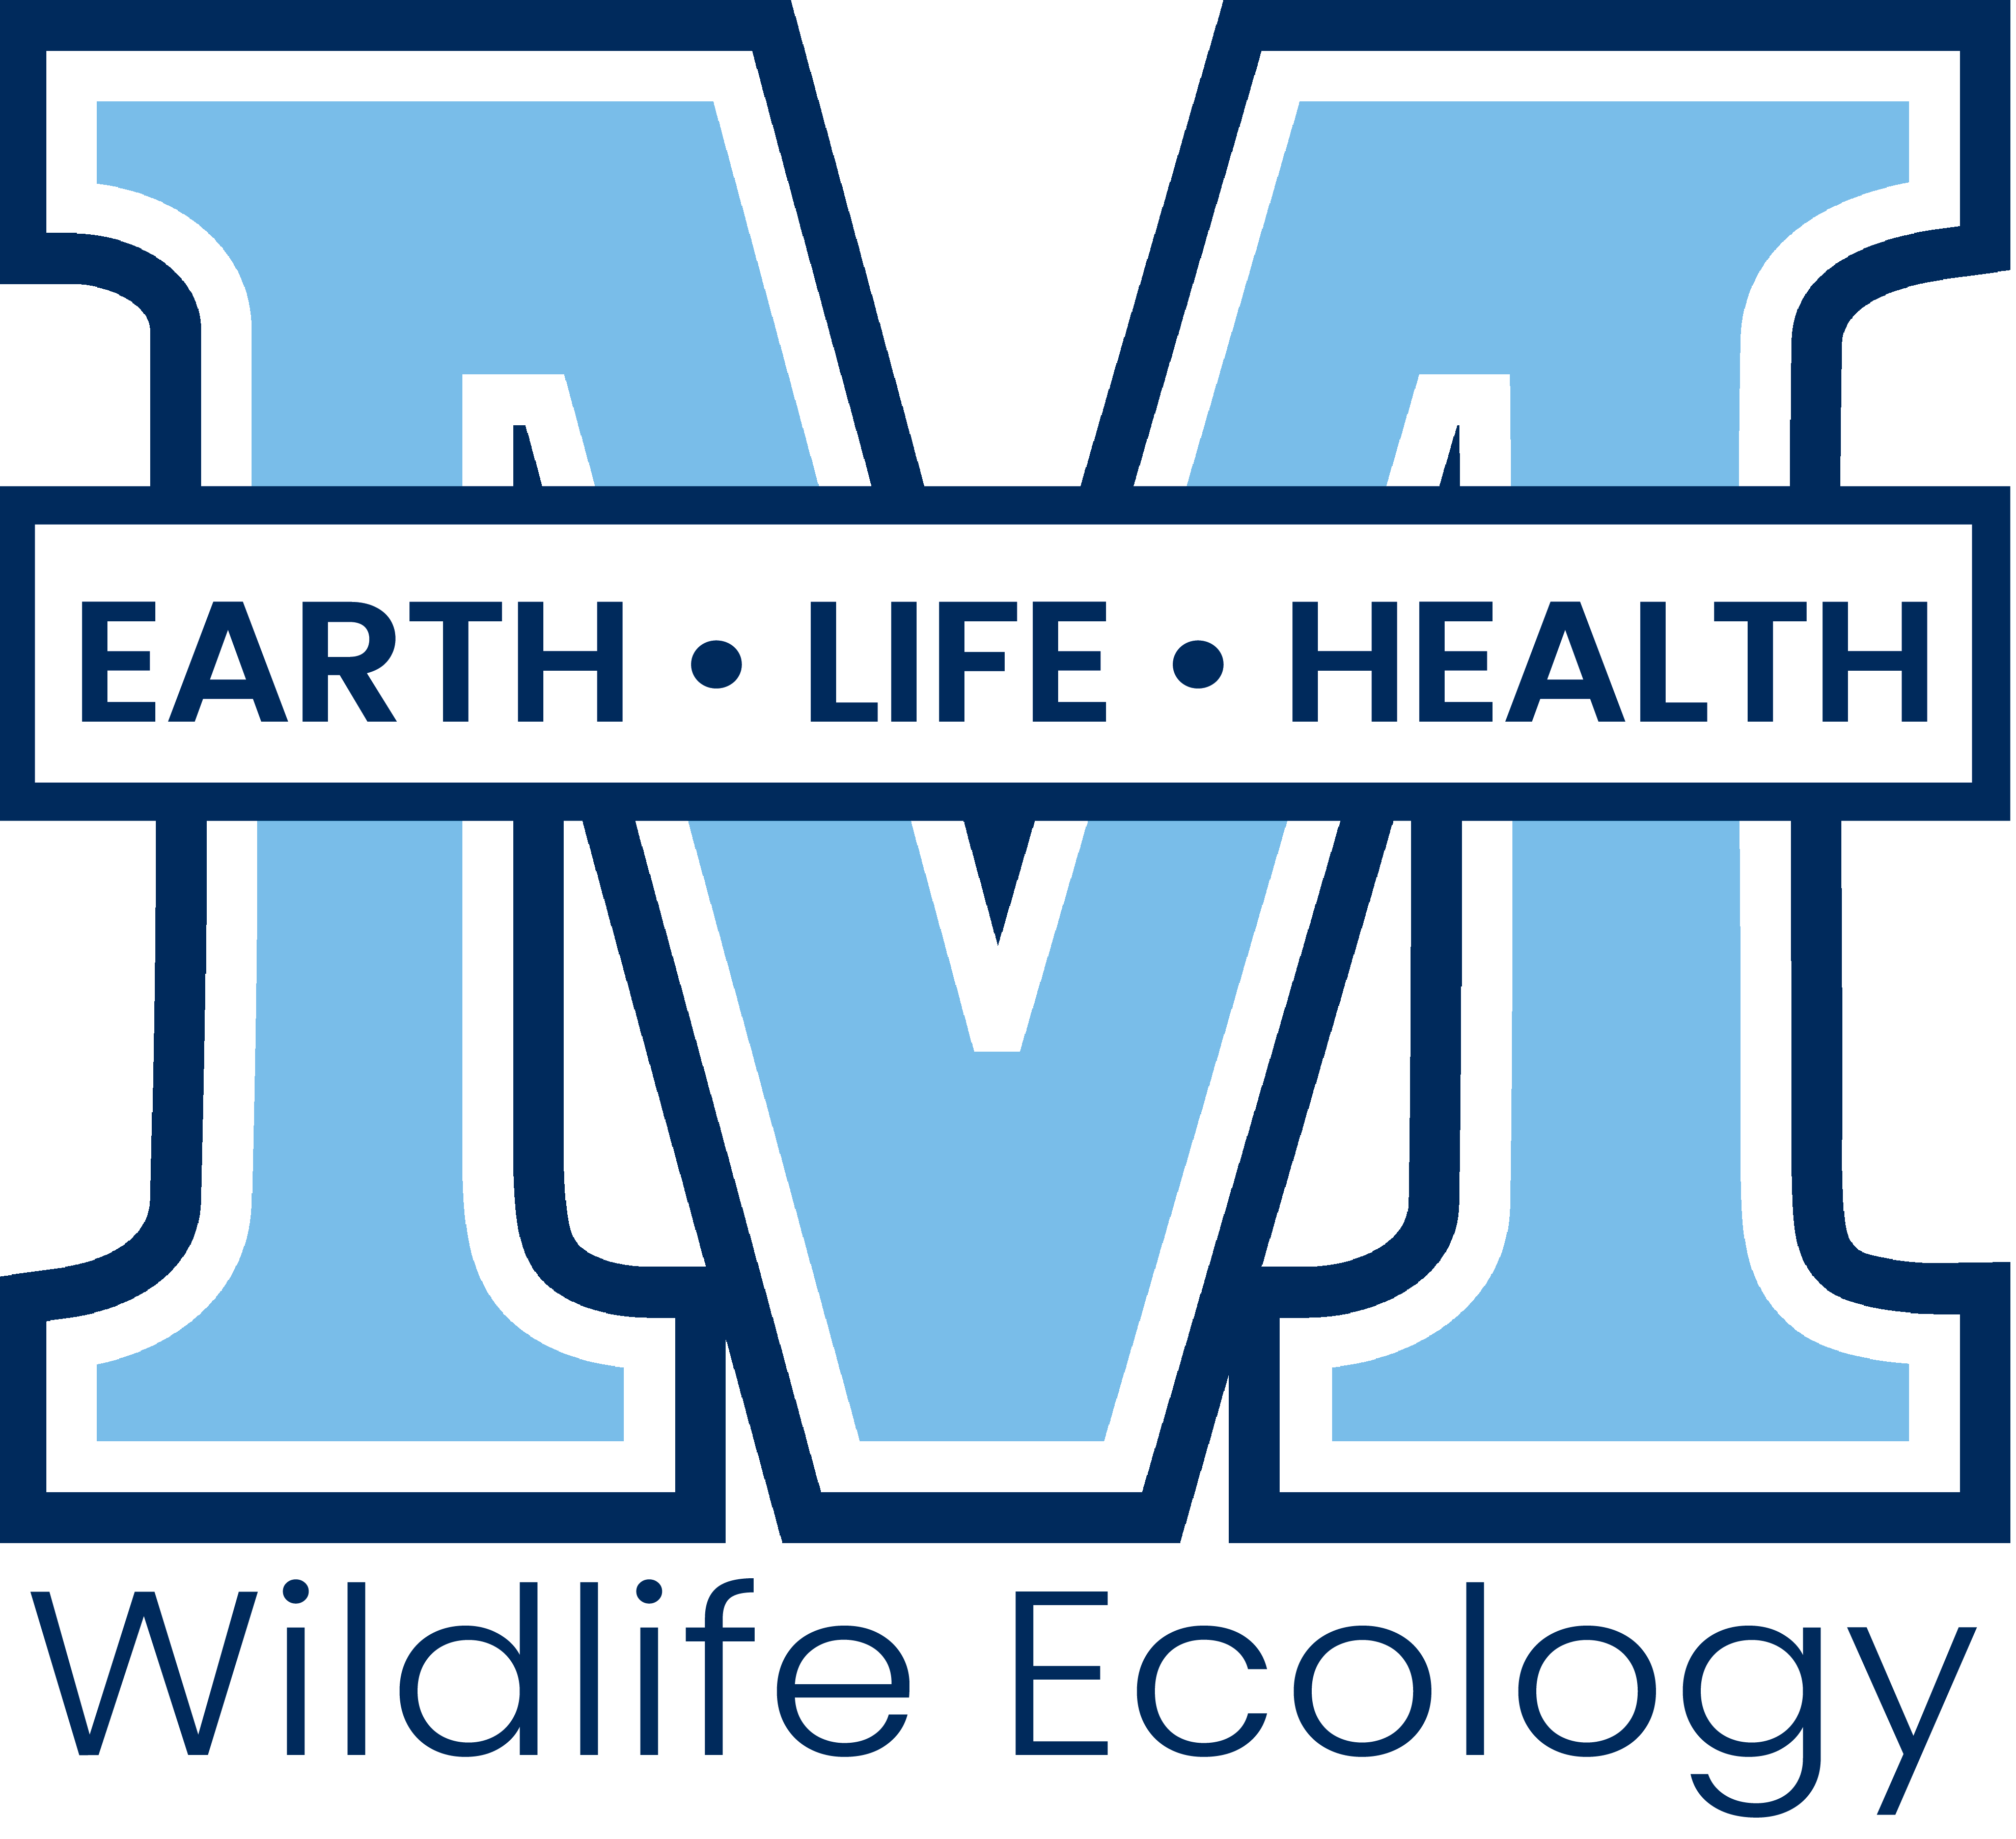 College M logo with wildlife ecology